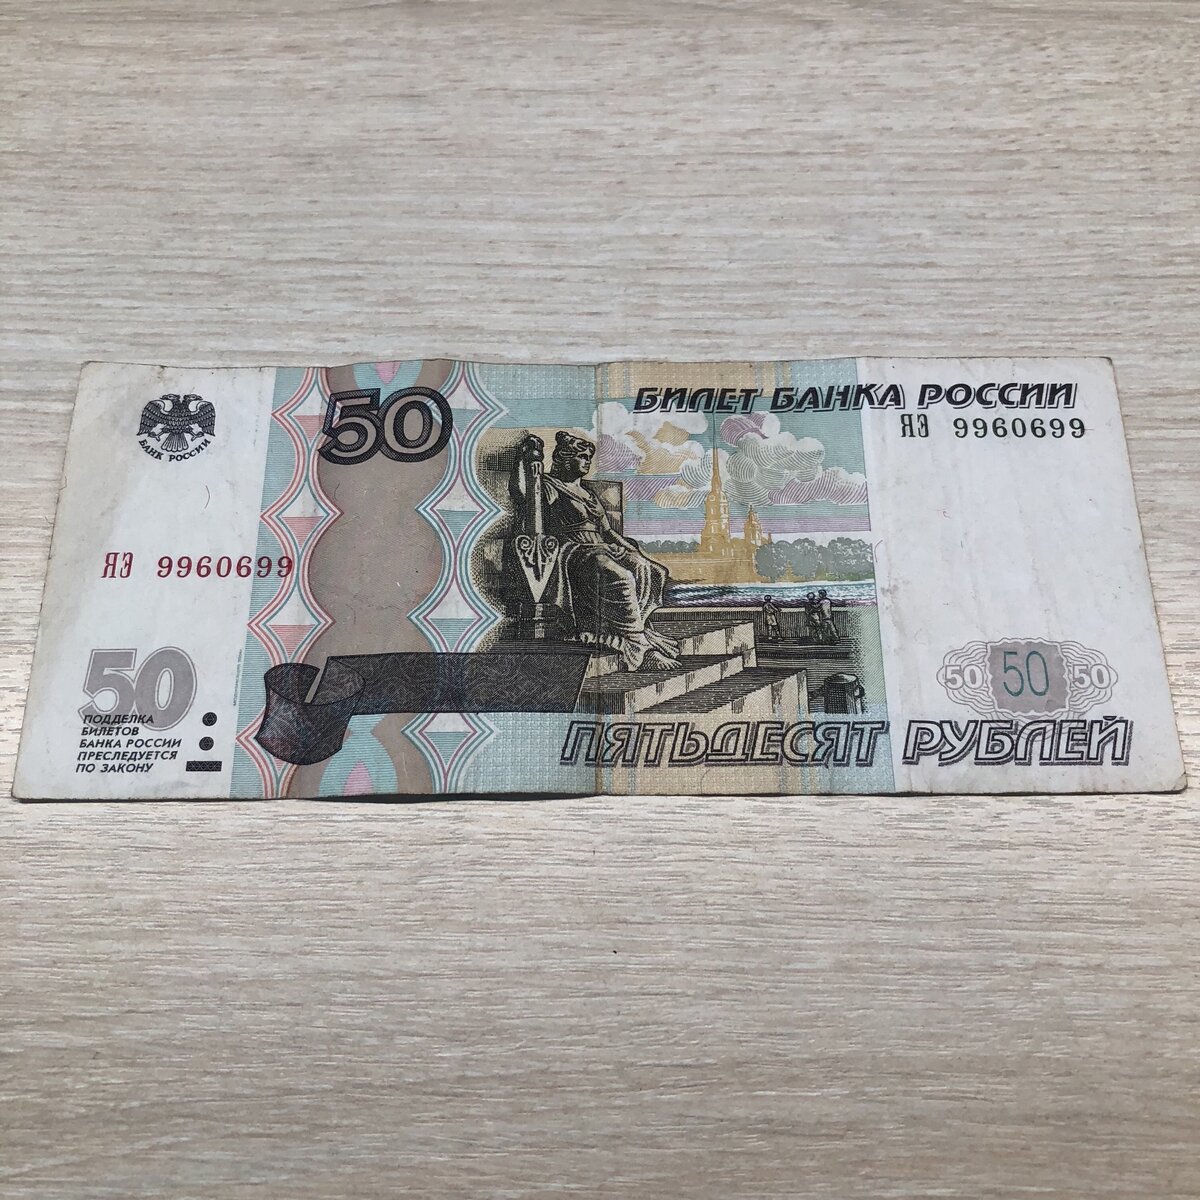 50 рублей на steam фото 74